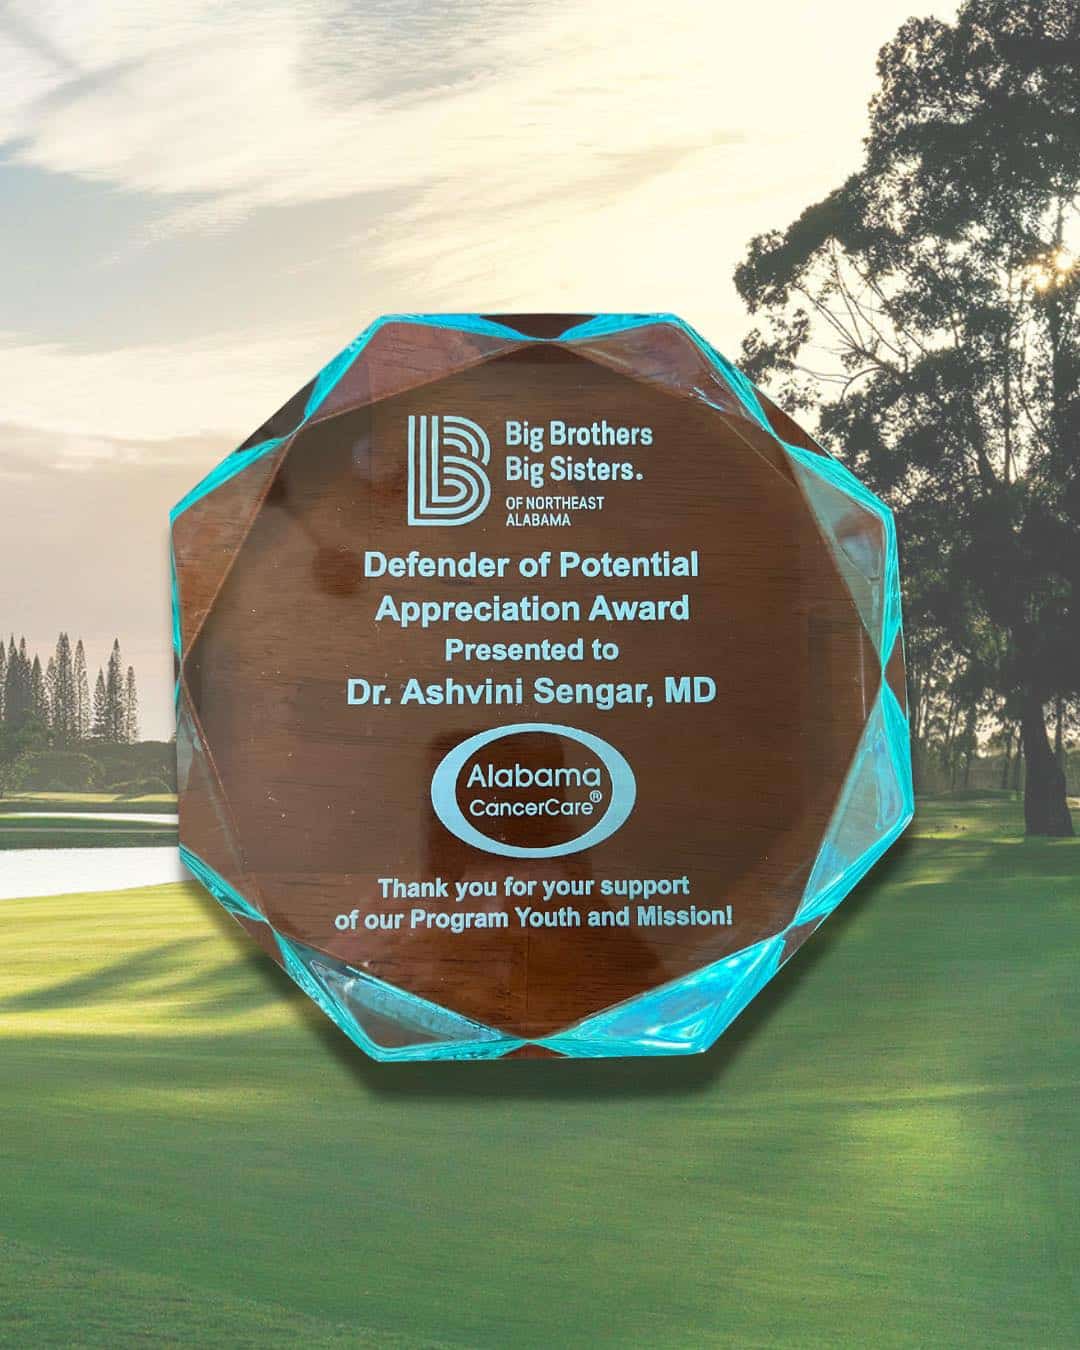 An award showing Dr. Ashvini Sengar as Defender of Potential appreciation award from the Big Brothers Big Sisters of Northeast Alabama